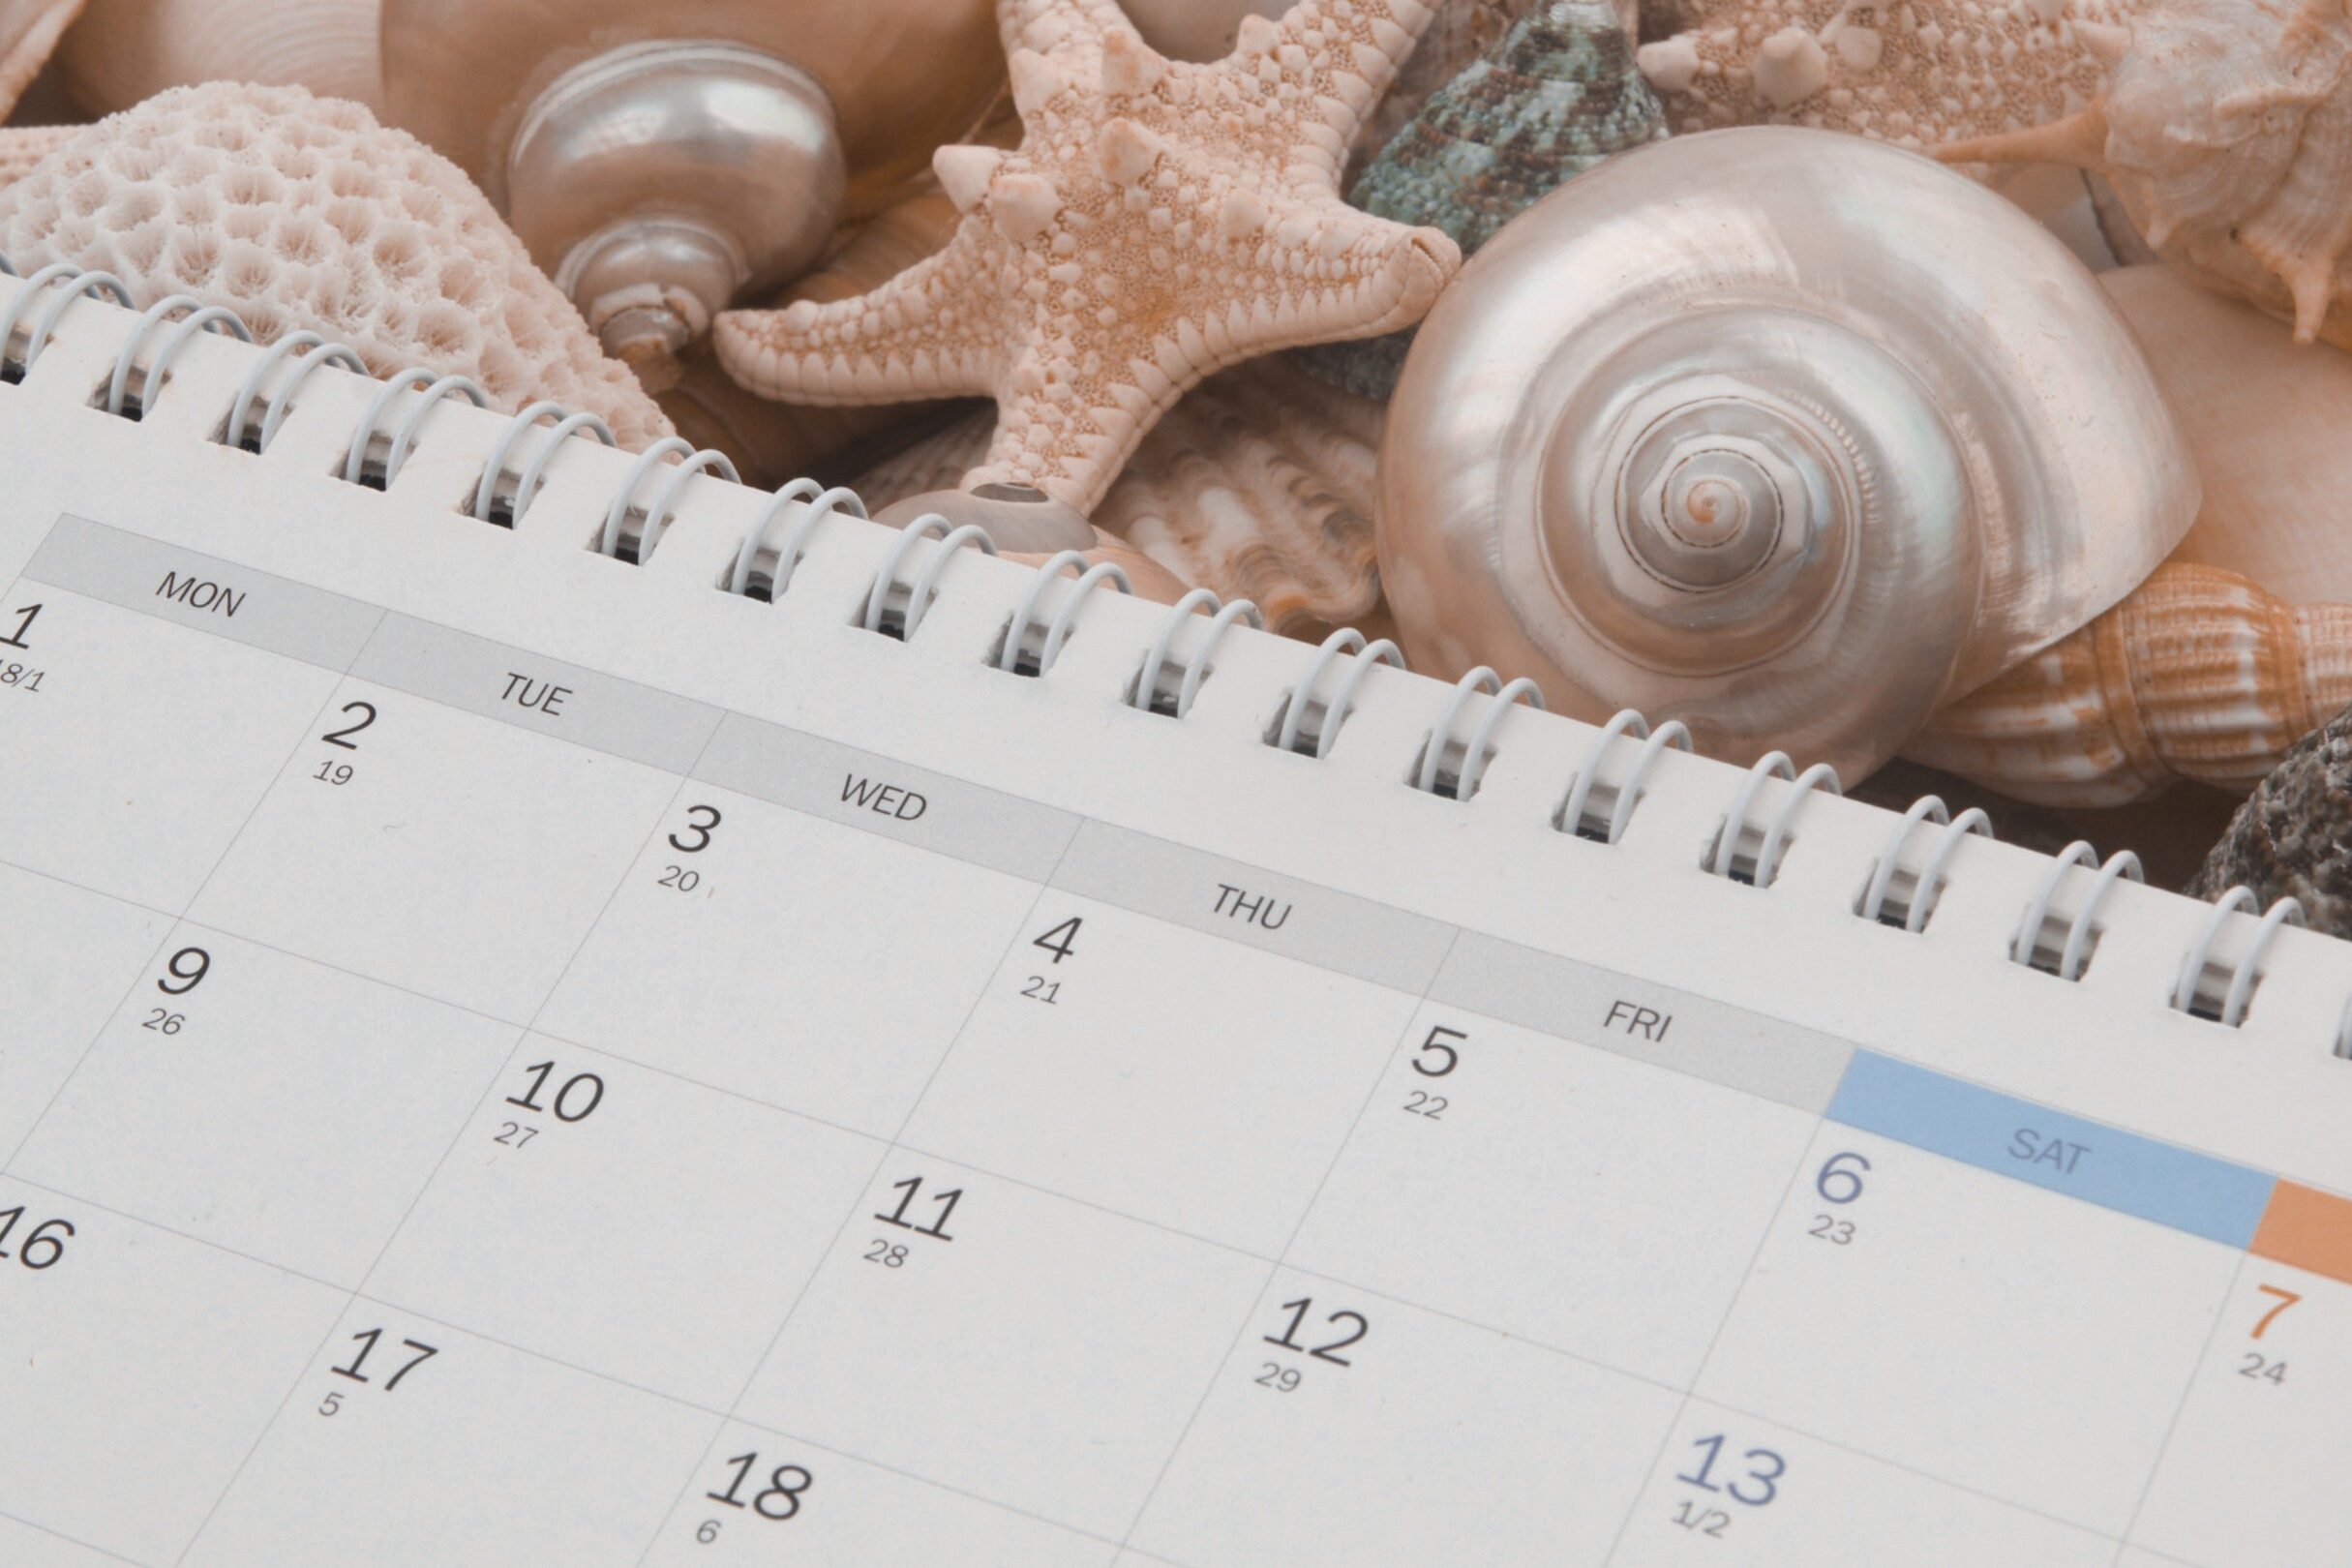 calendar next to some seashells